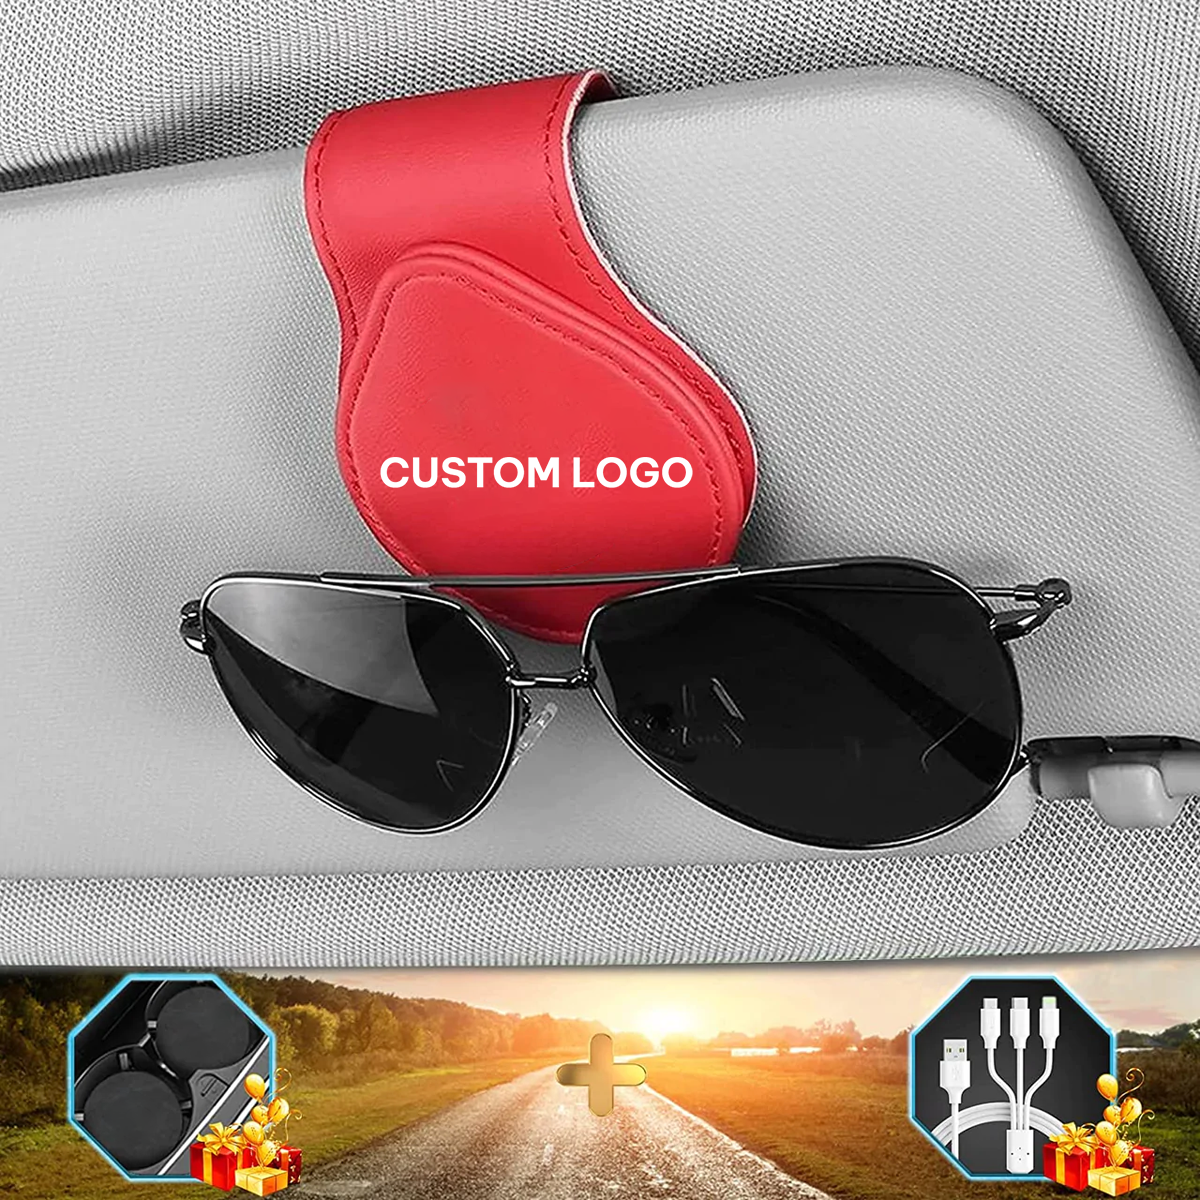 Custom Logo Sunglasses Holder for Car Visor Clips, Fit with Toyota, Leather Magnet Adsorption Visor Accessories Car Organizer for Storing Glasses Tickets Eyeglasses Hanger